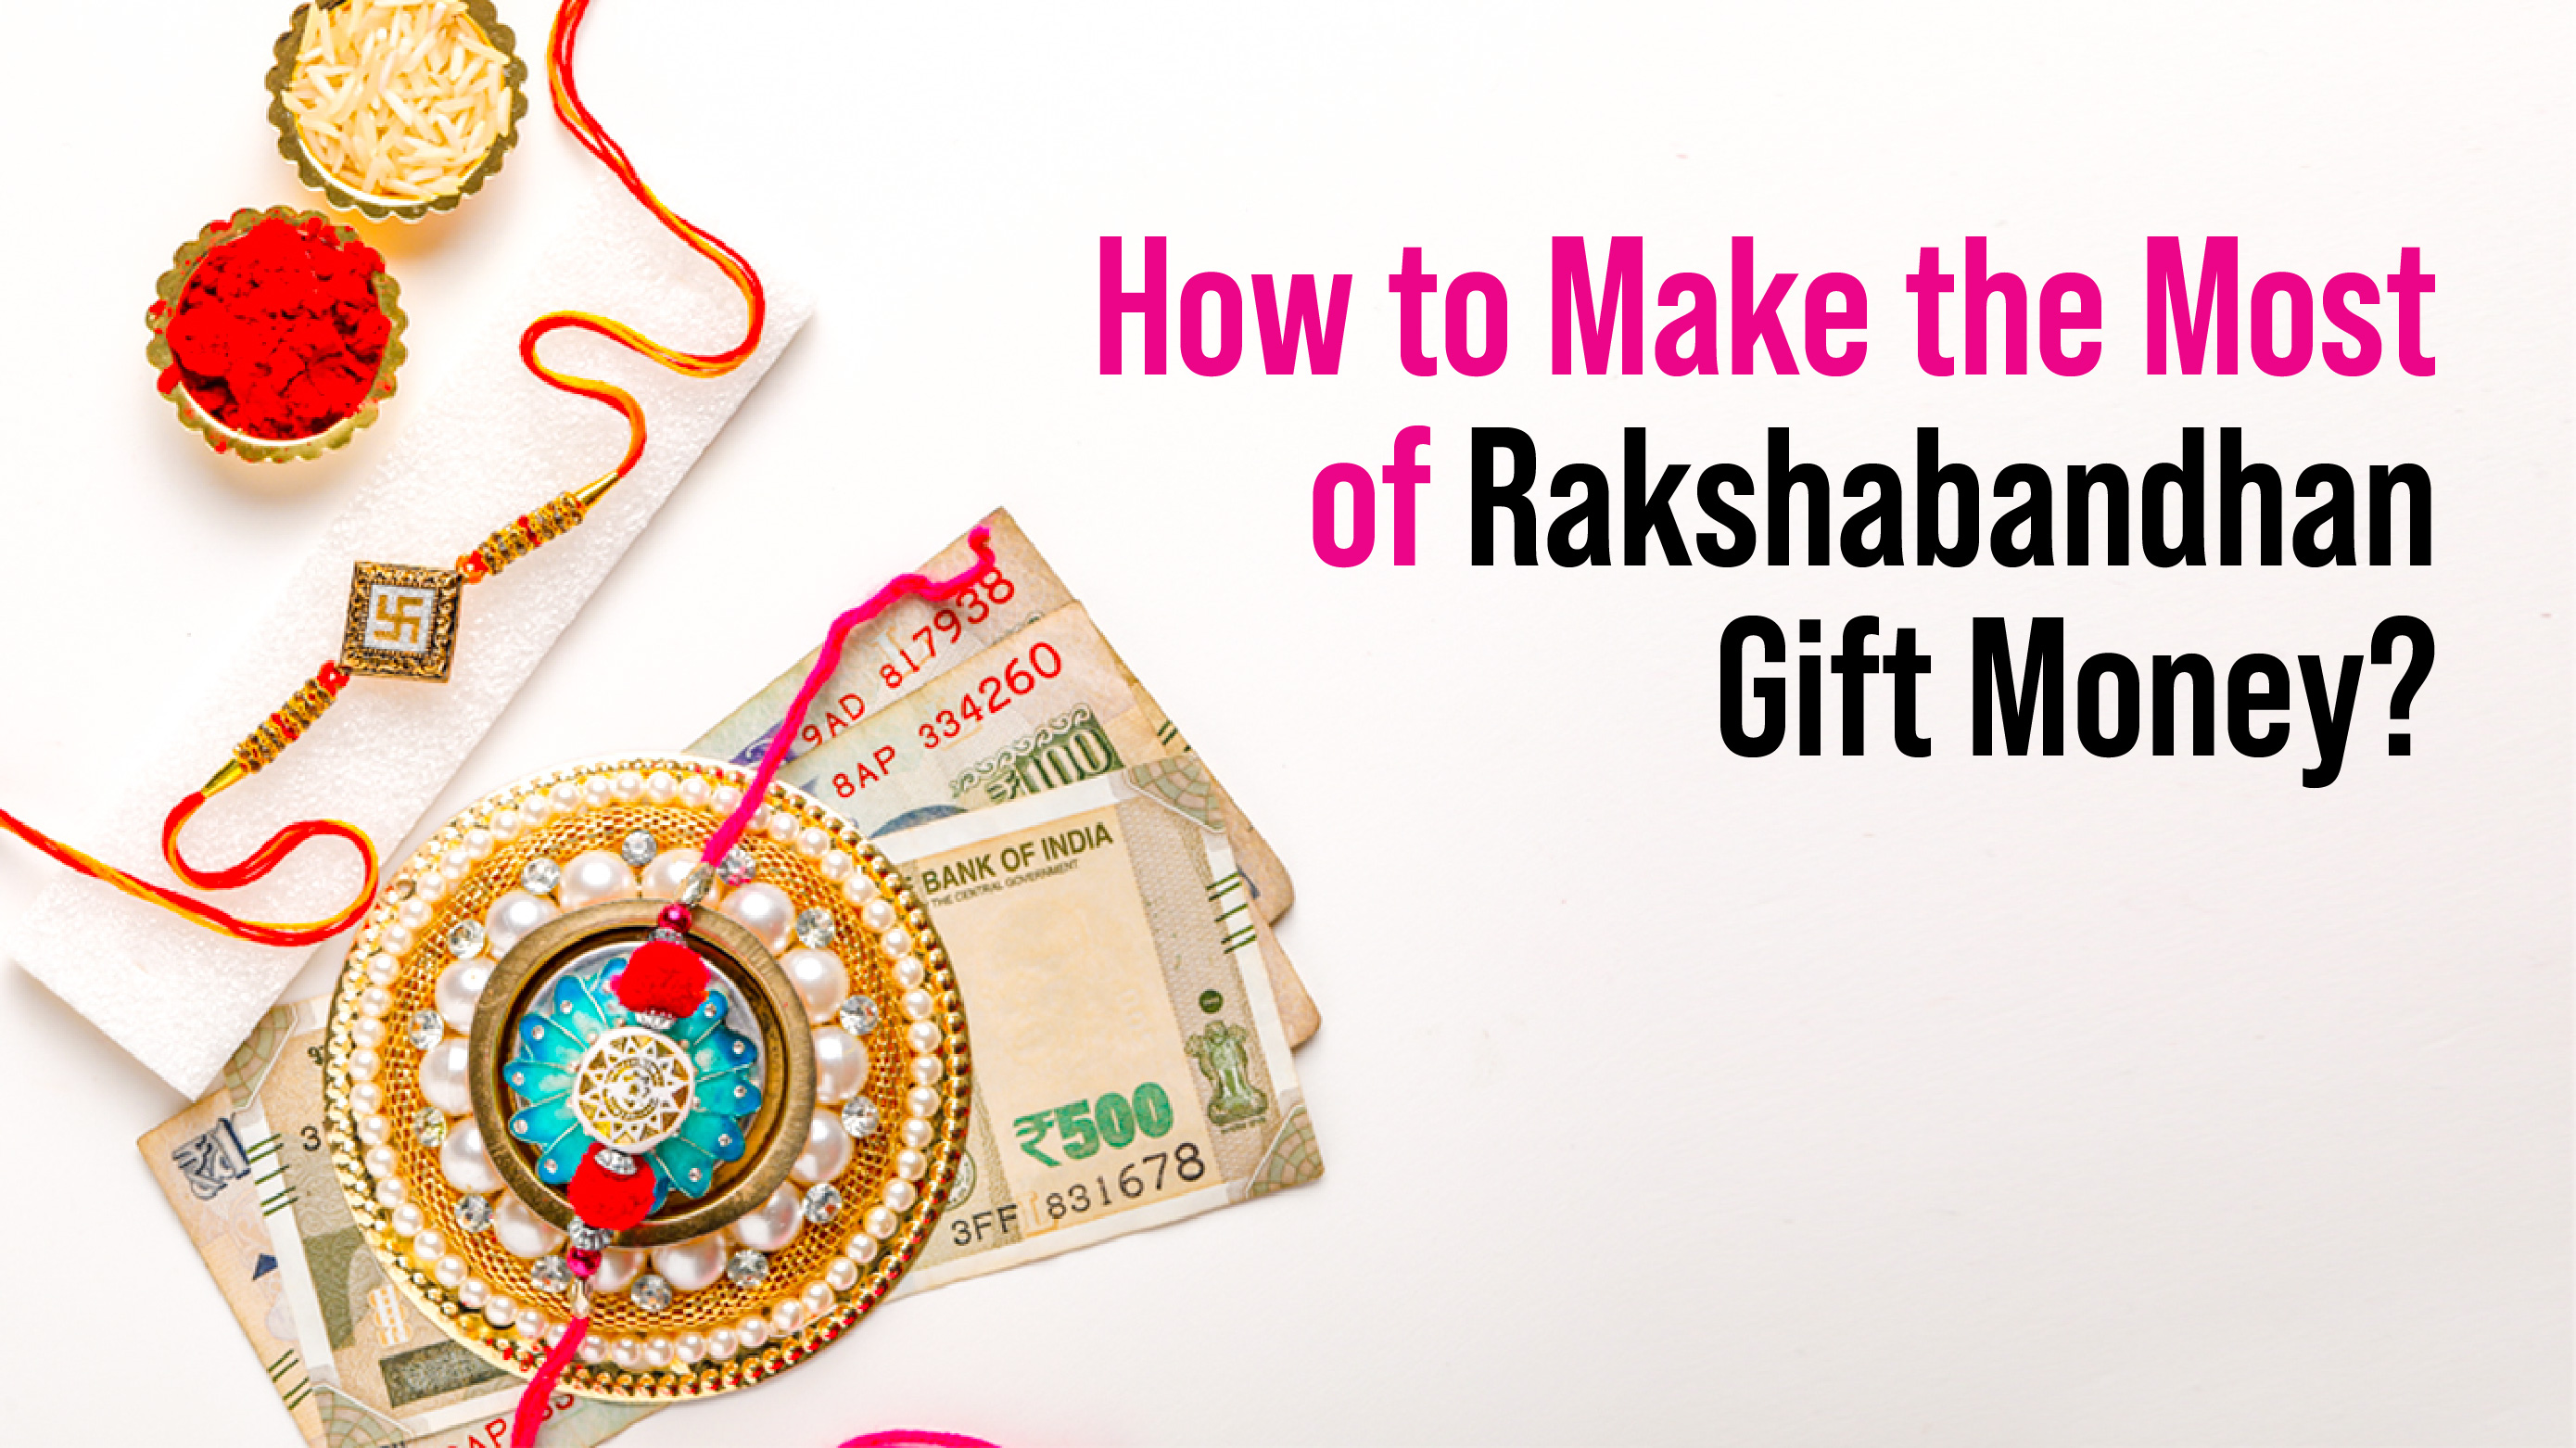 How to make the most of rakshabandhan gift money